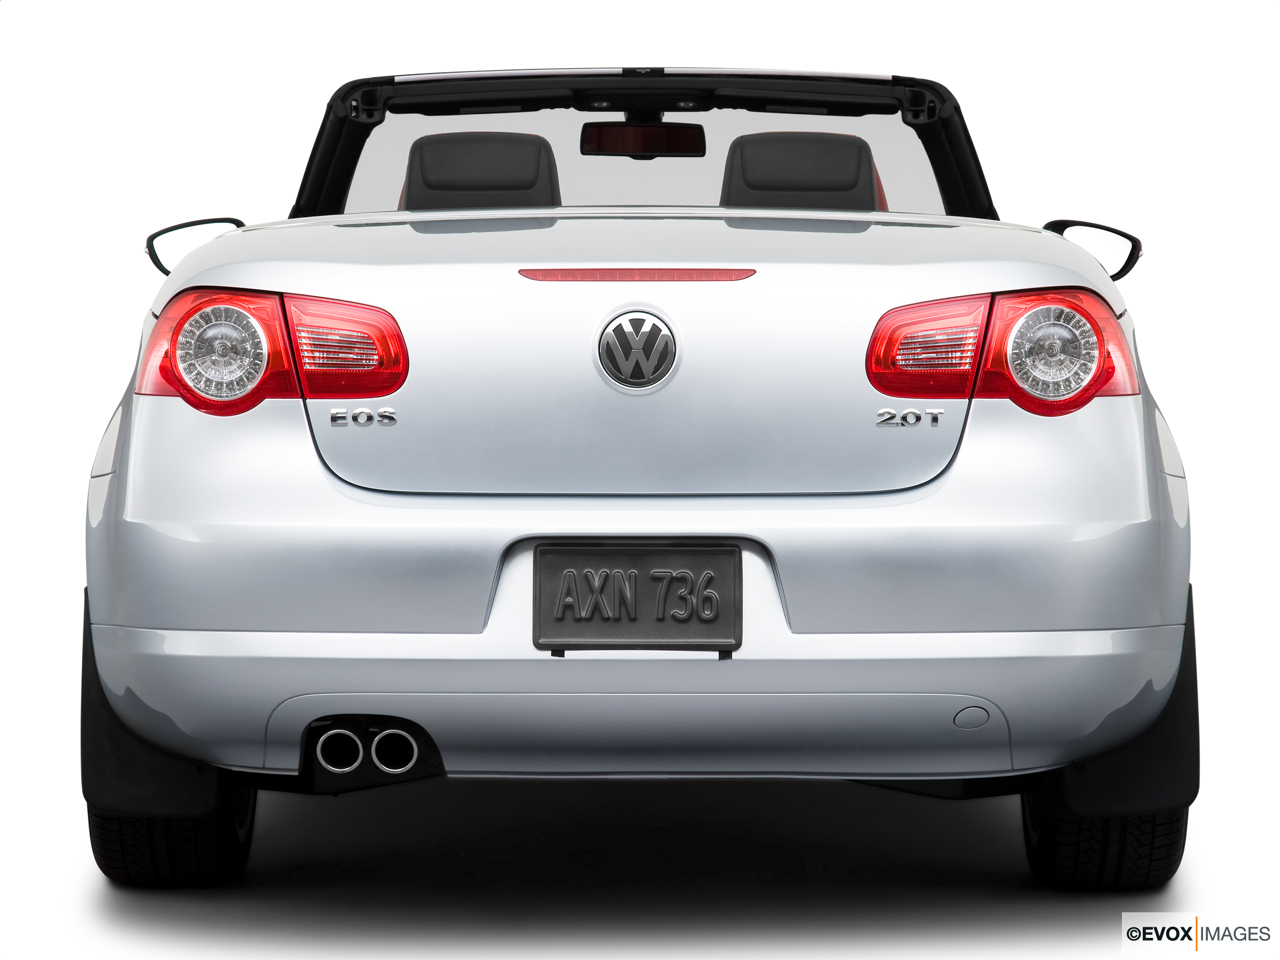 2010 Volkswagen Eos Lux Low/wide rear. 